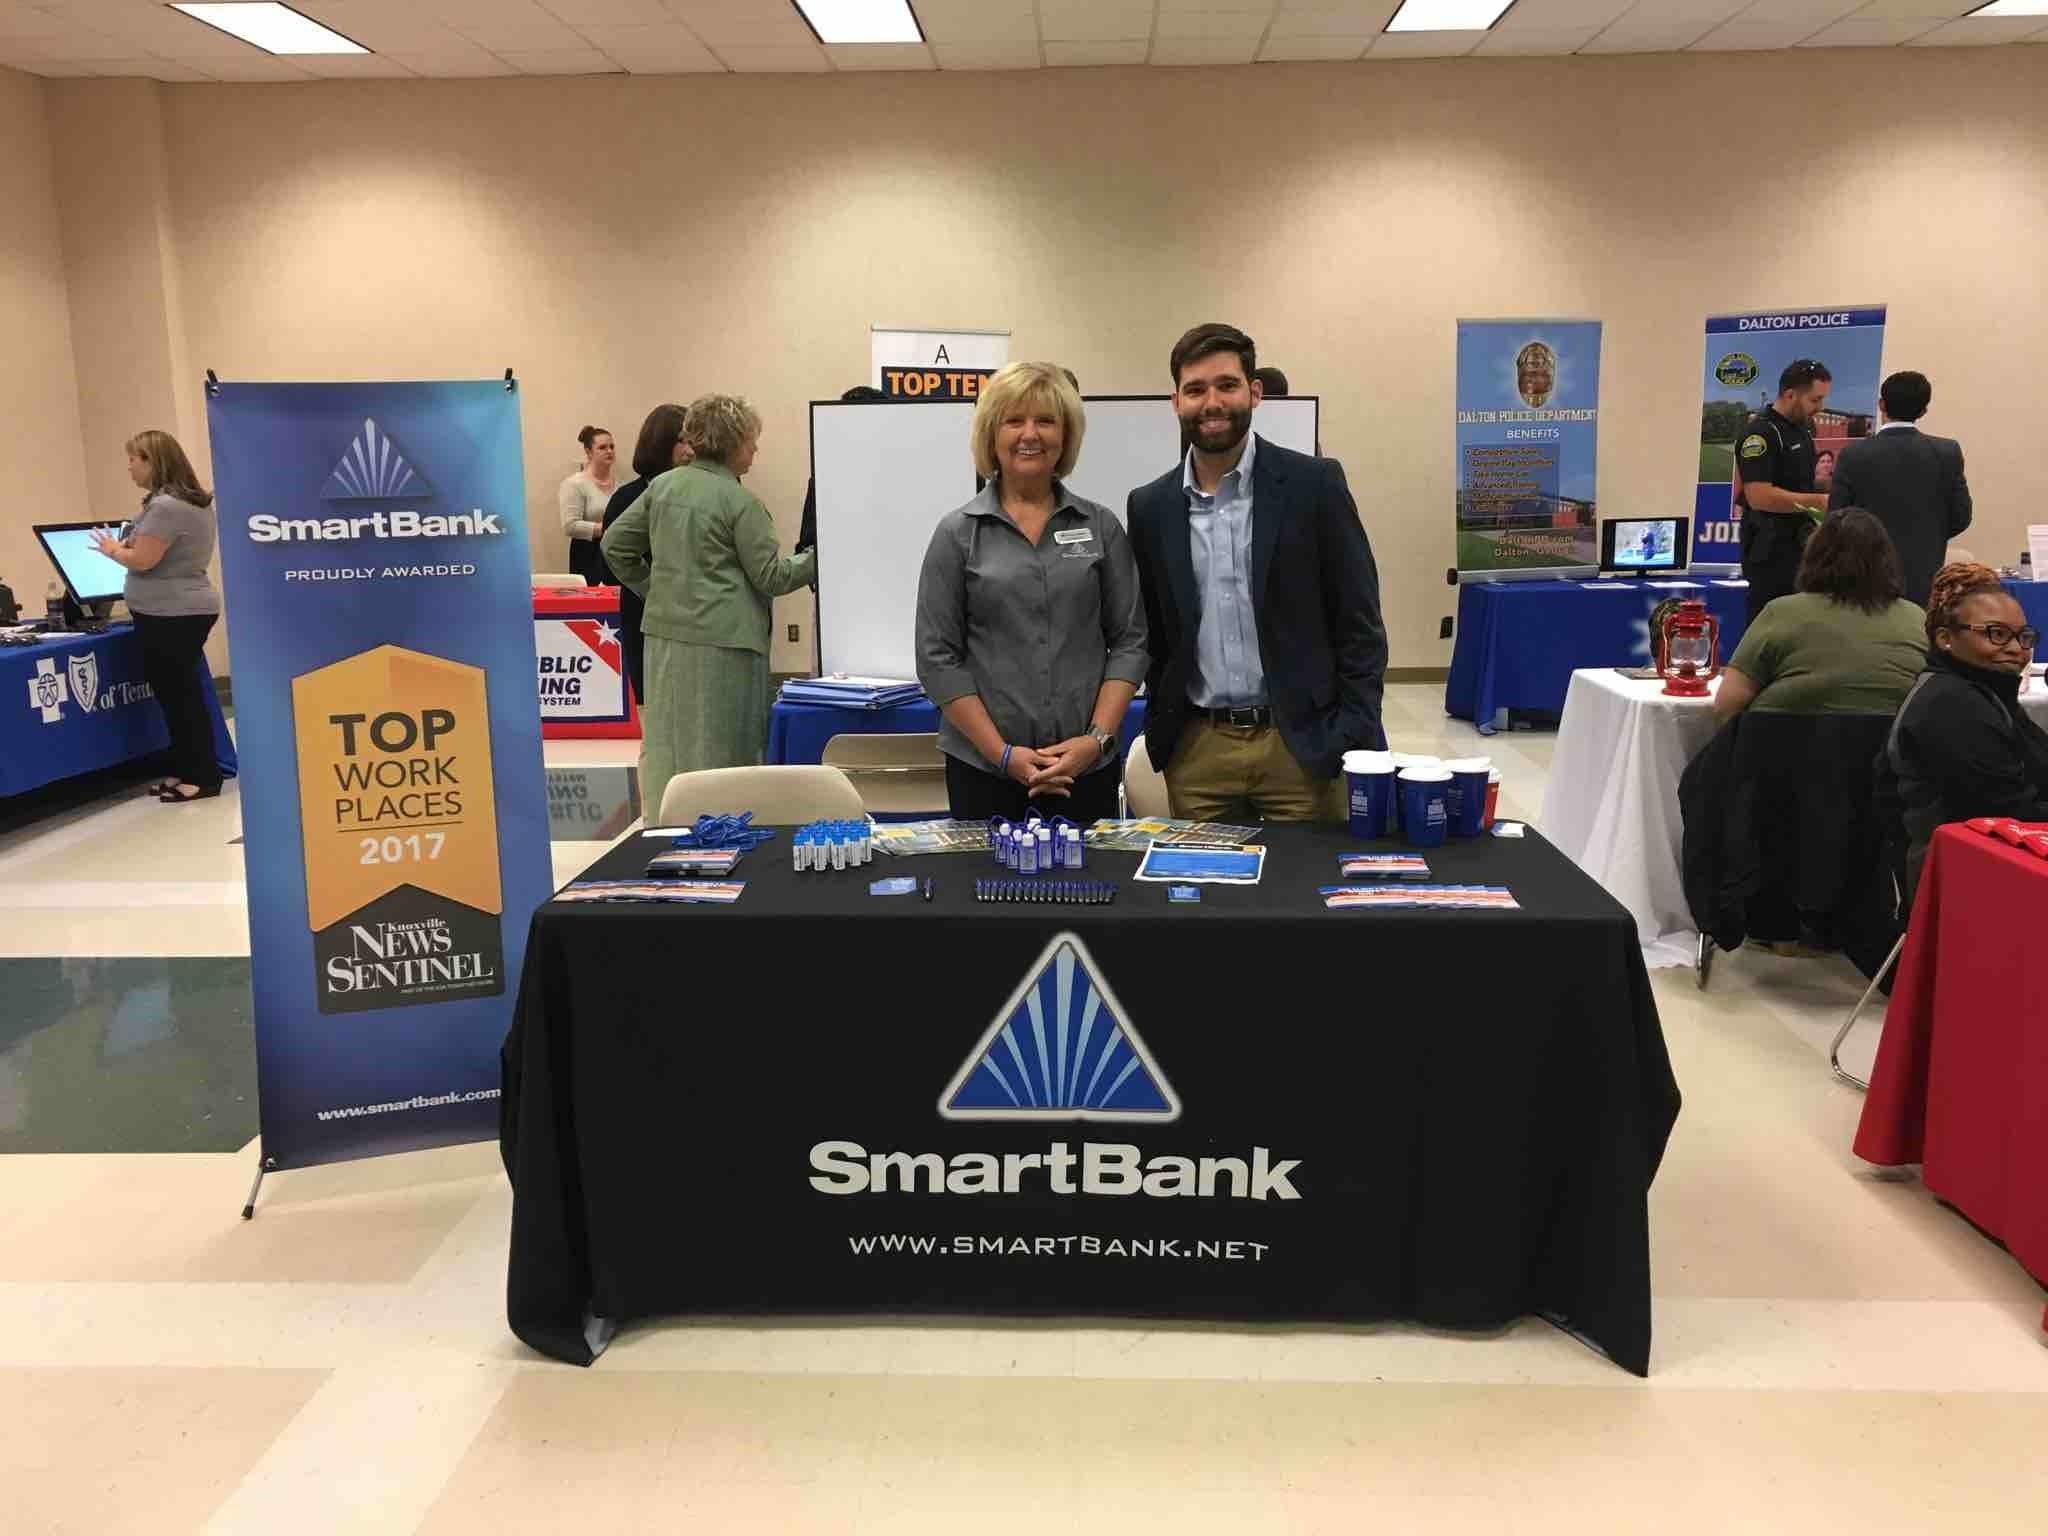 SmartBank Tuscaloosa, AL (University) Photo